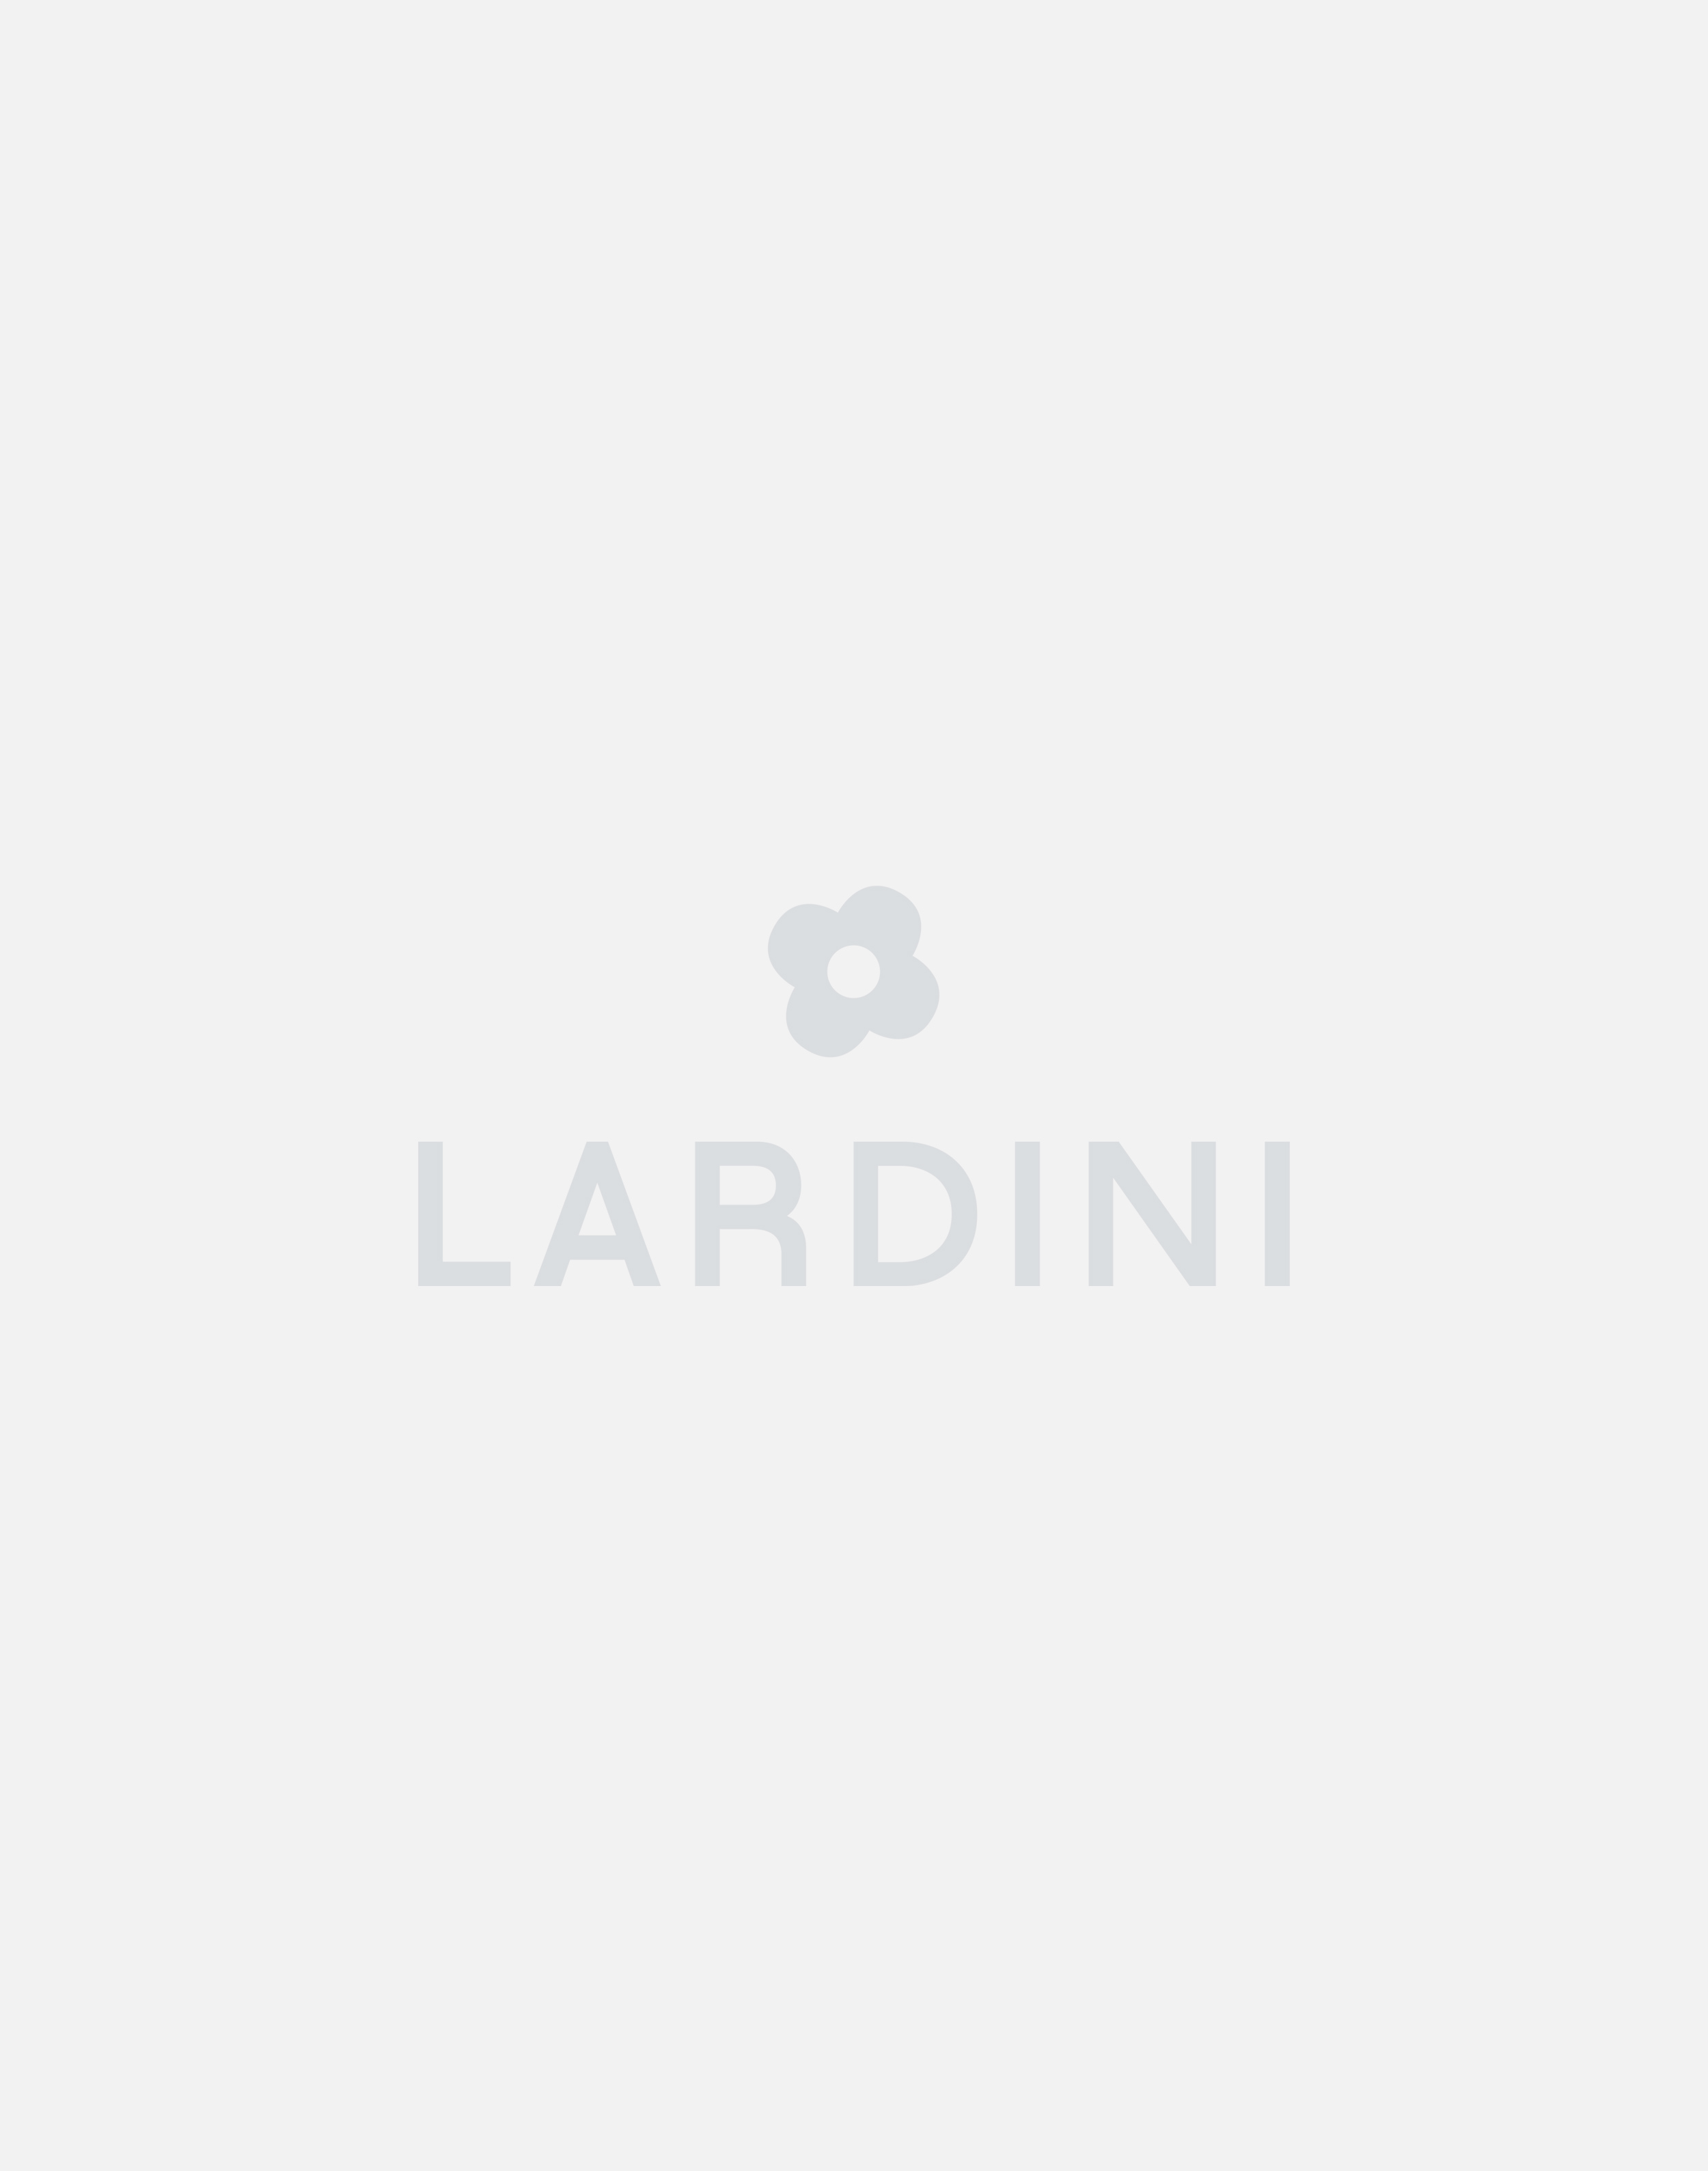 Scarf with geometric pattern - Luigi Lardini capsule 3